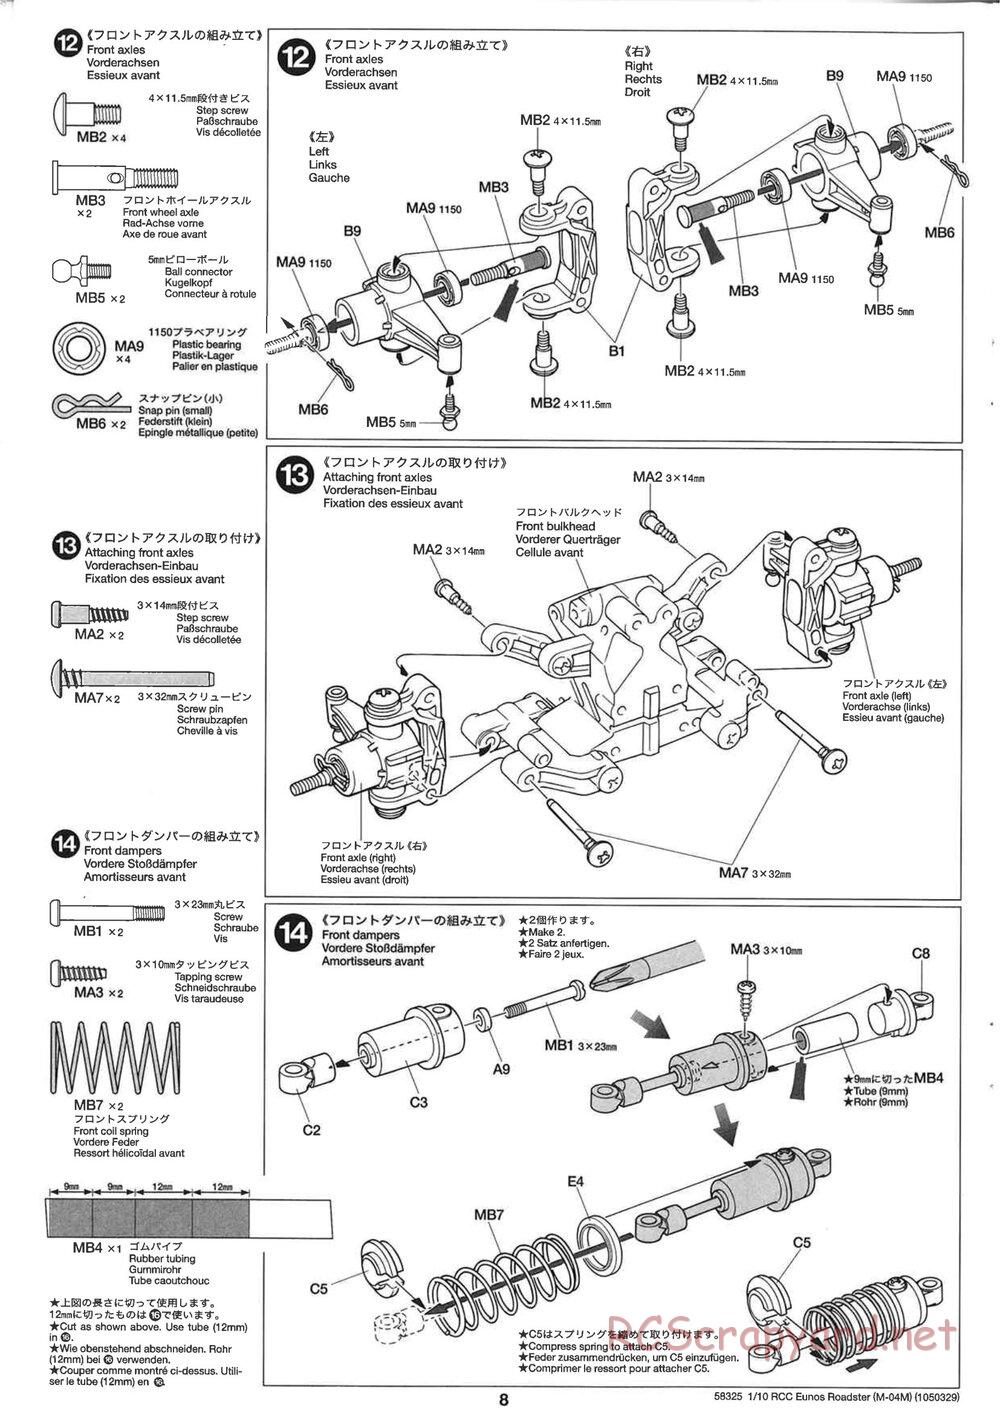 Tamiya - Eunos Roadster - M04M Chassis - Manual - Page 8